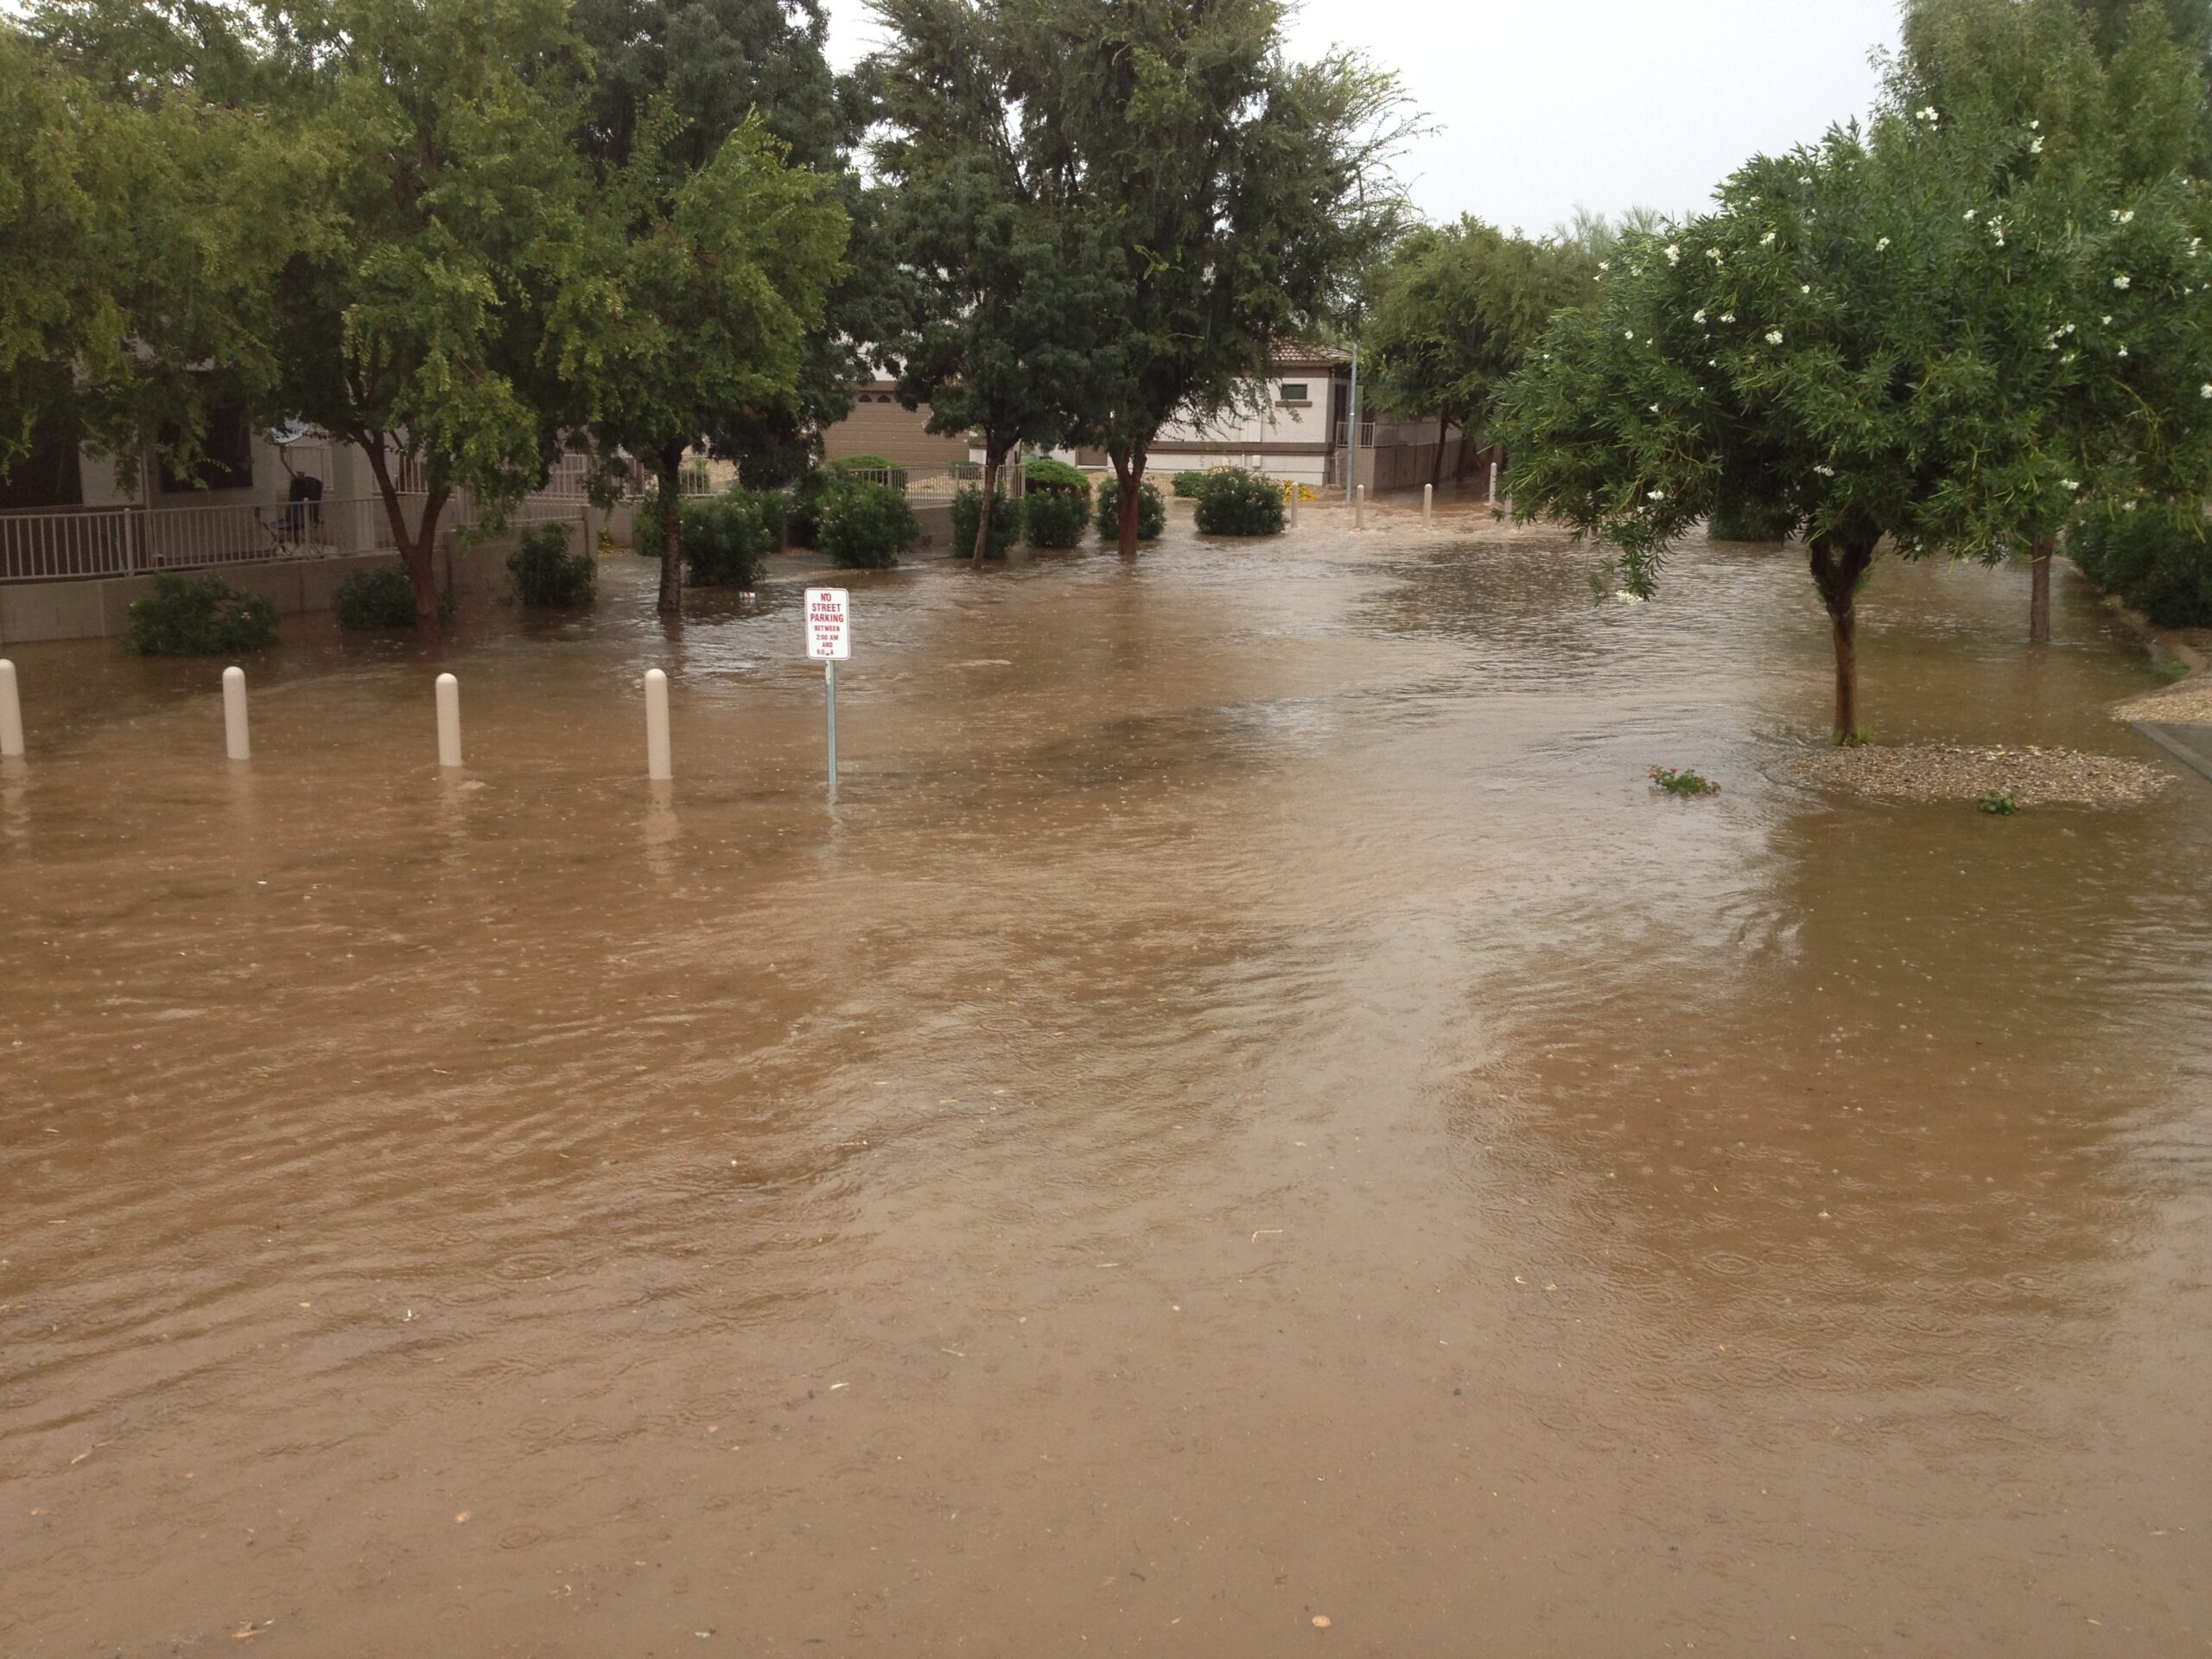 More Flooding in Arizona